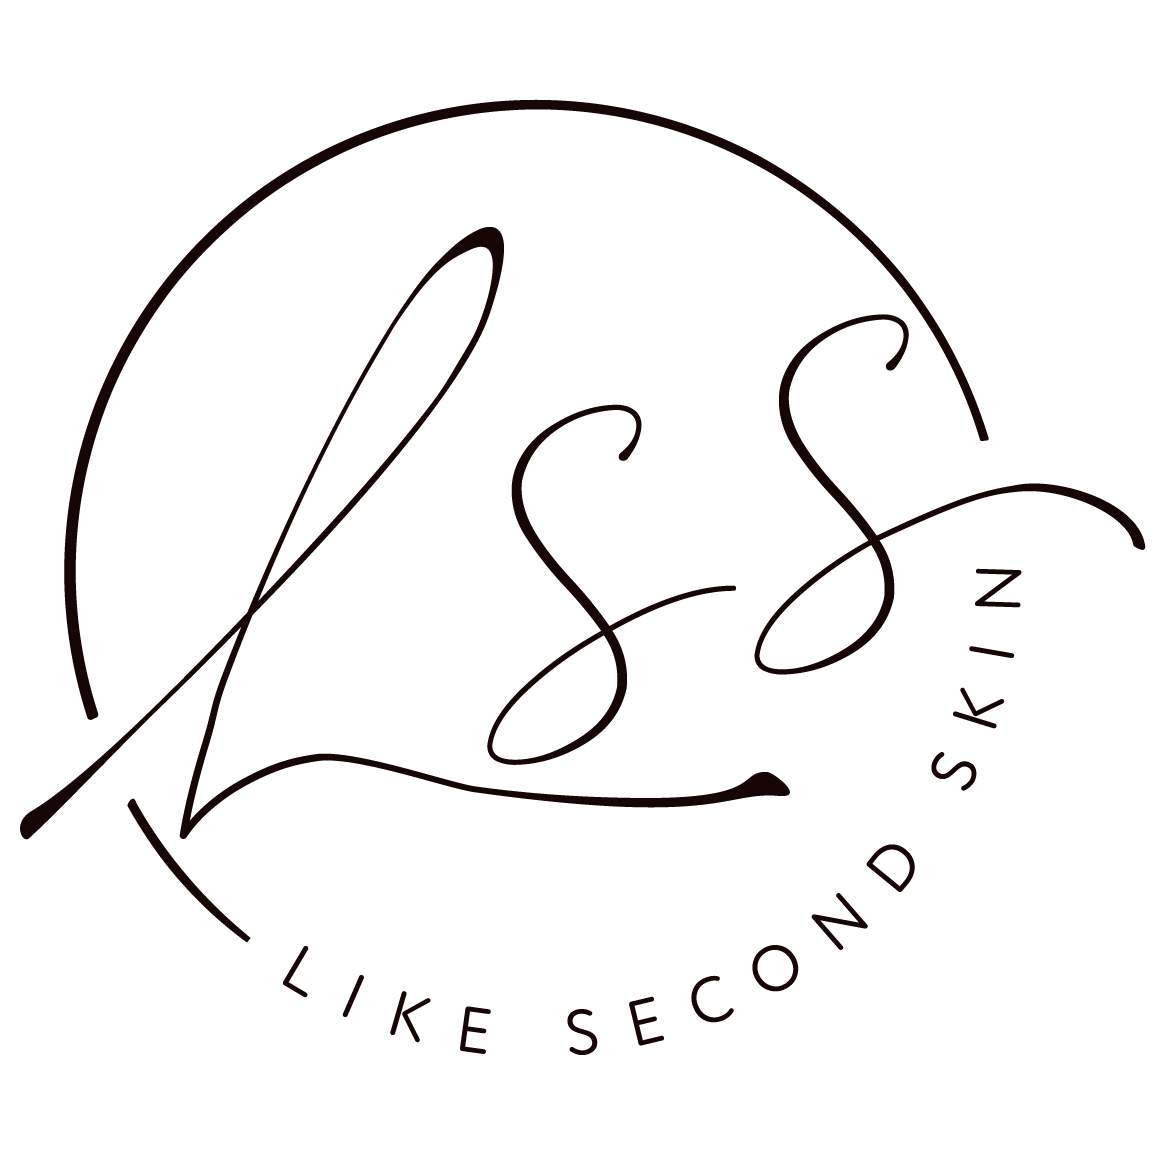 LSS – Like Second Skin